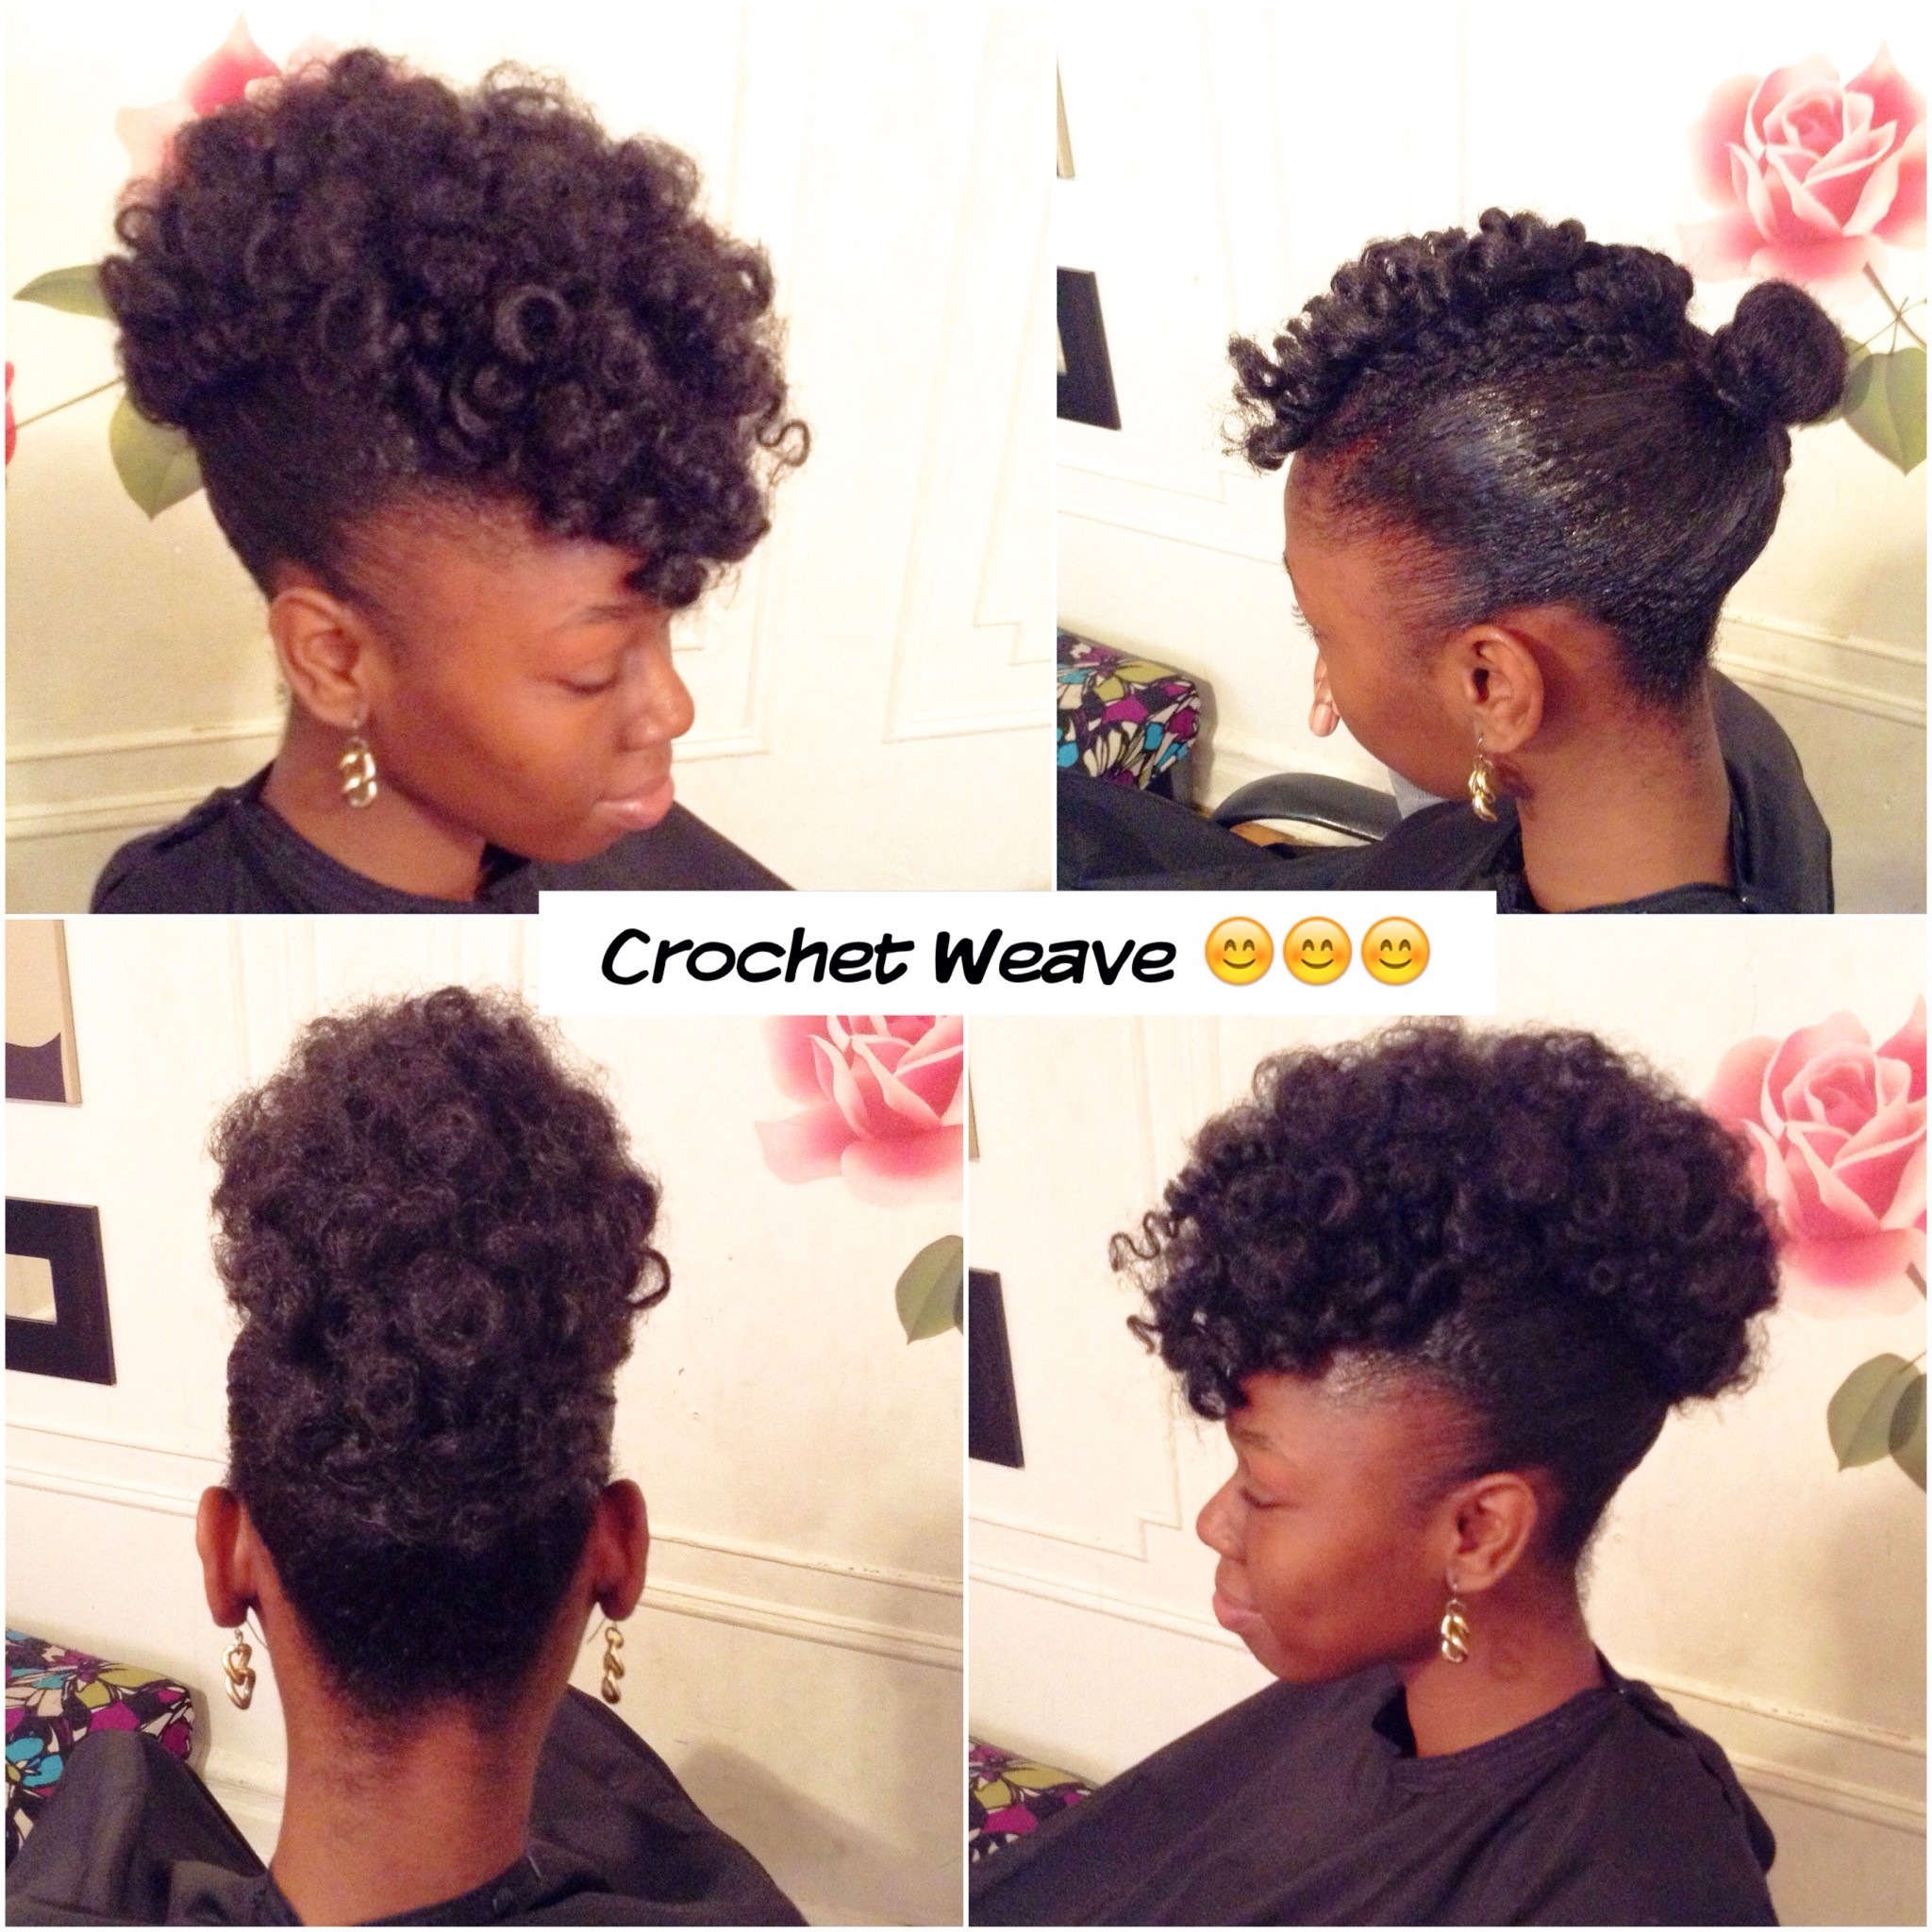 Updo Crochet Hairstyles
 crochet weave updo hairstyle –